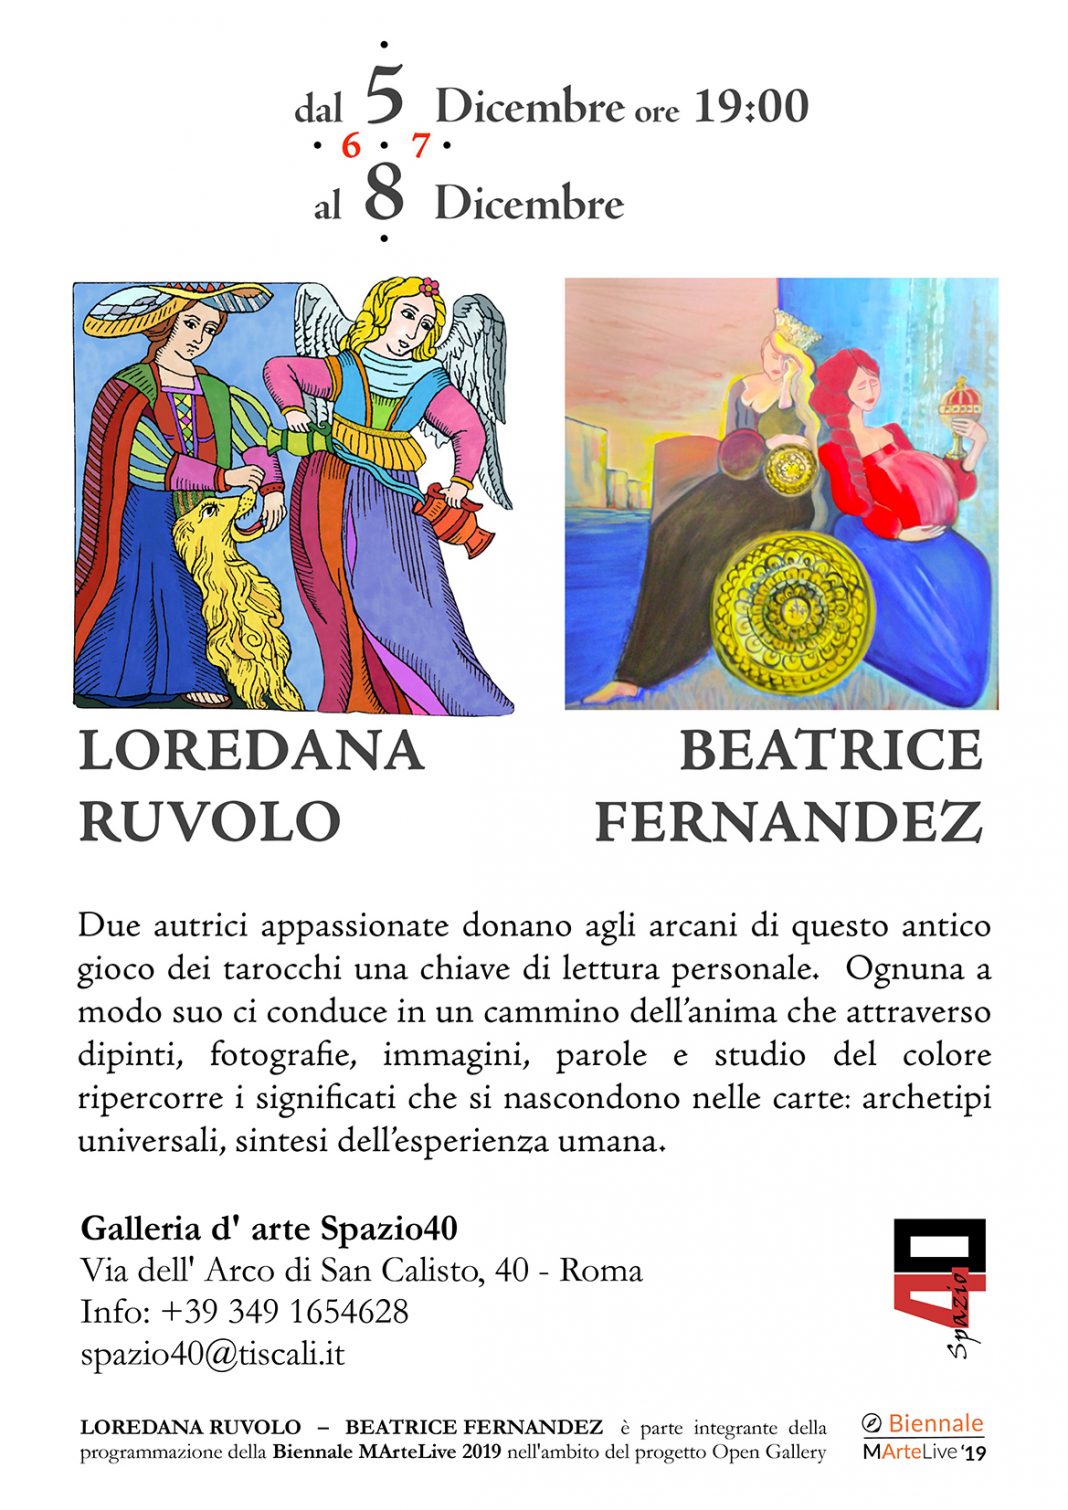 Beatrice Fernandez / Loredana Ruvolohttps://www.exibart.com/repository/media/formidable/11/locandina-aggiornata-rid-1068x1510.jpg